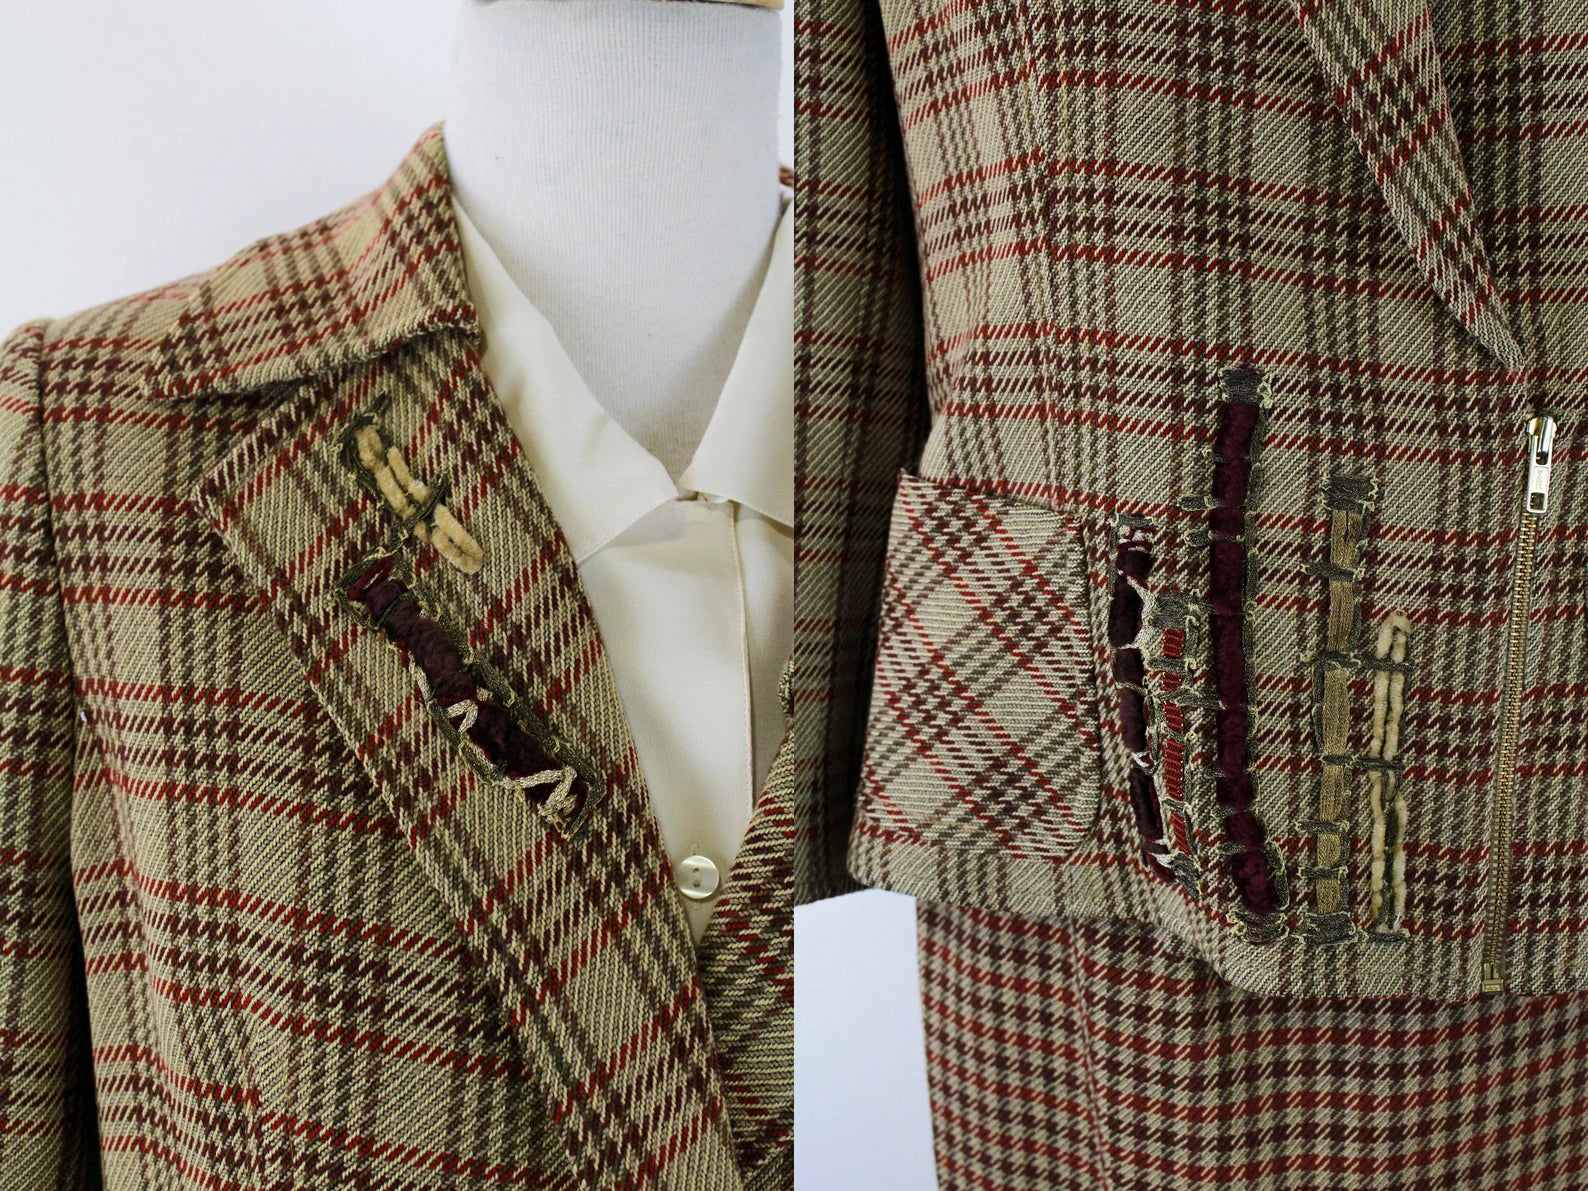 90s Christian Lacroix Suit, Vintage Christian Lacroix Designer Check Plaid Wool Skirt Suit, Made in France, Large